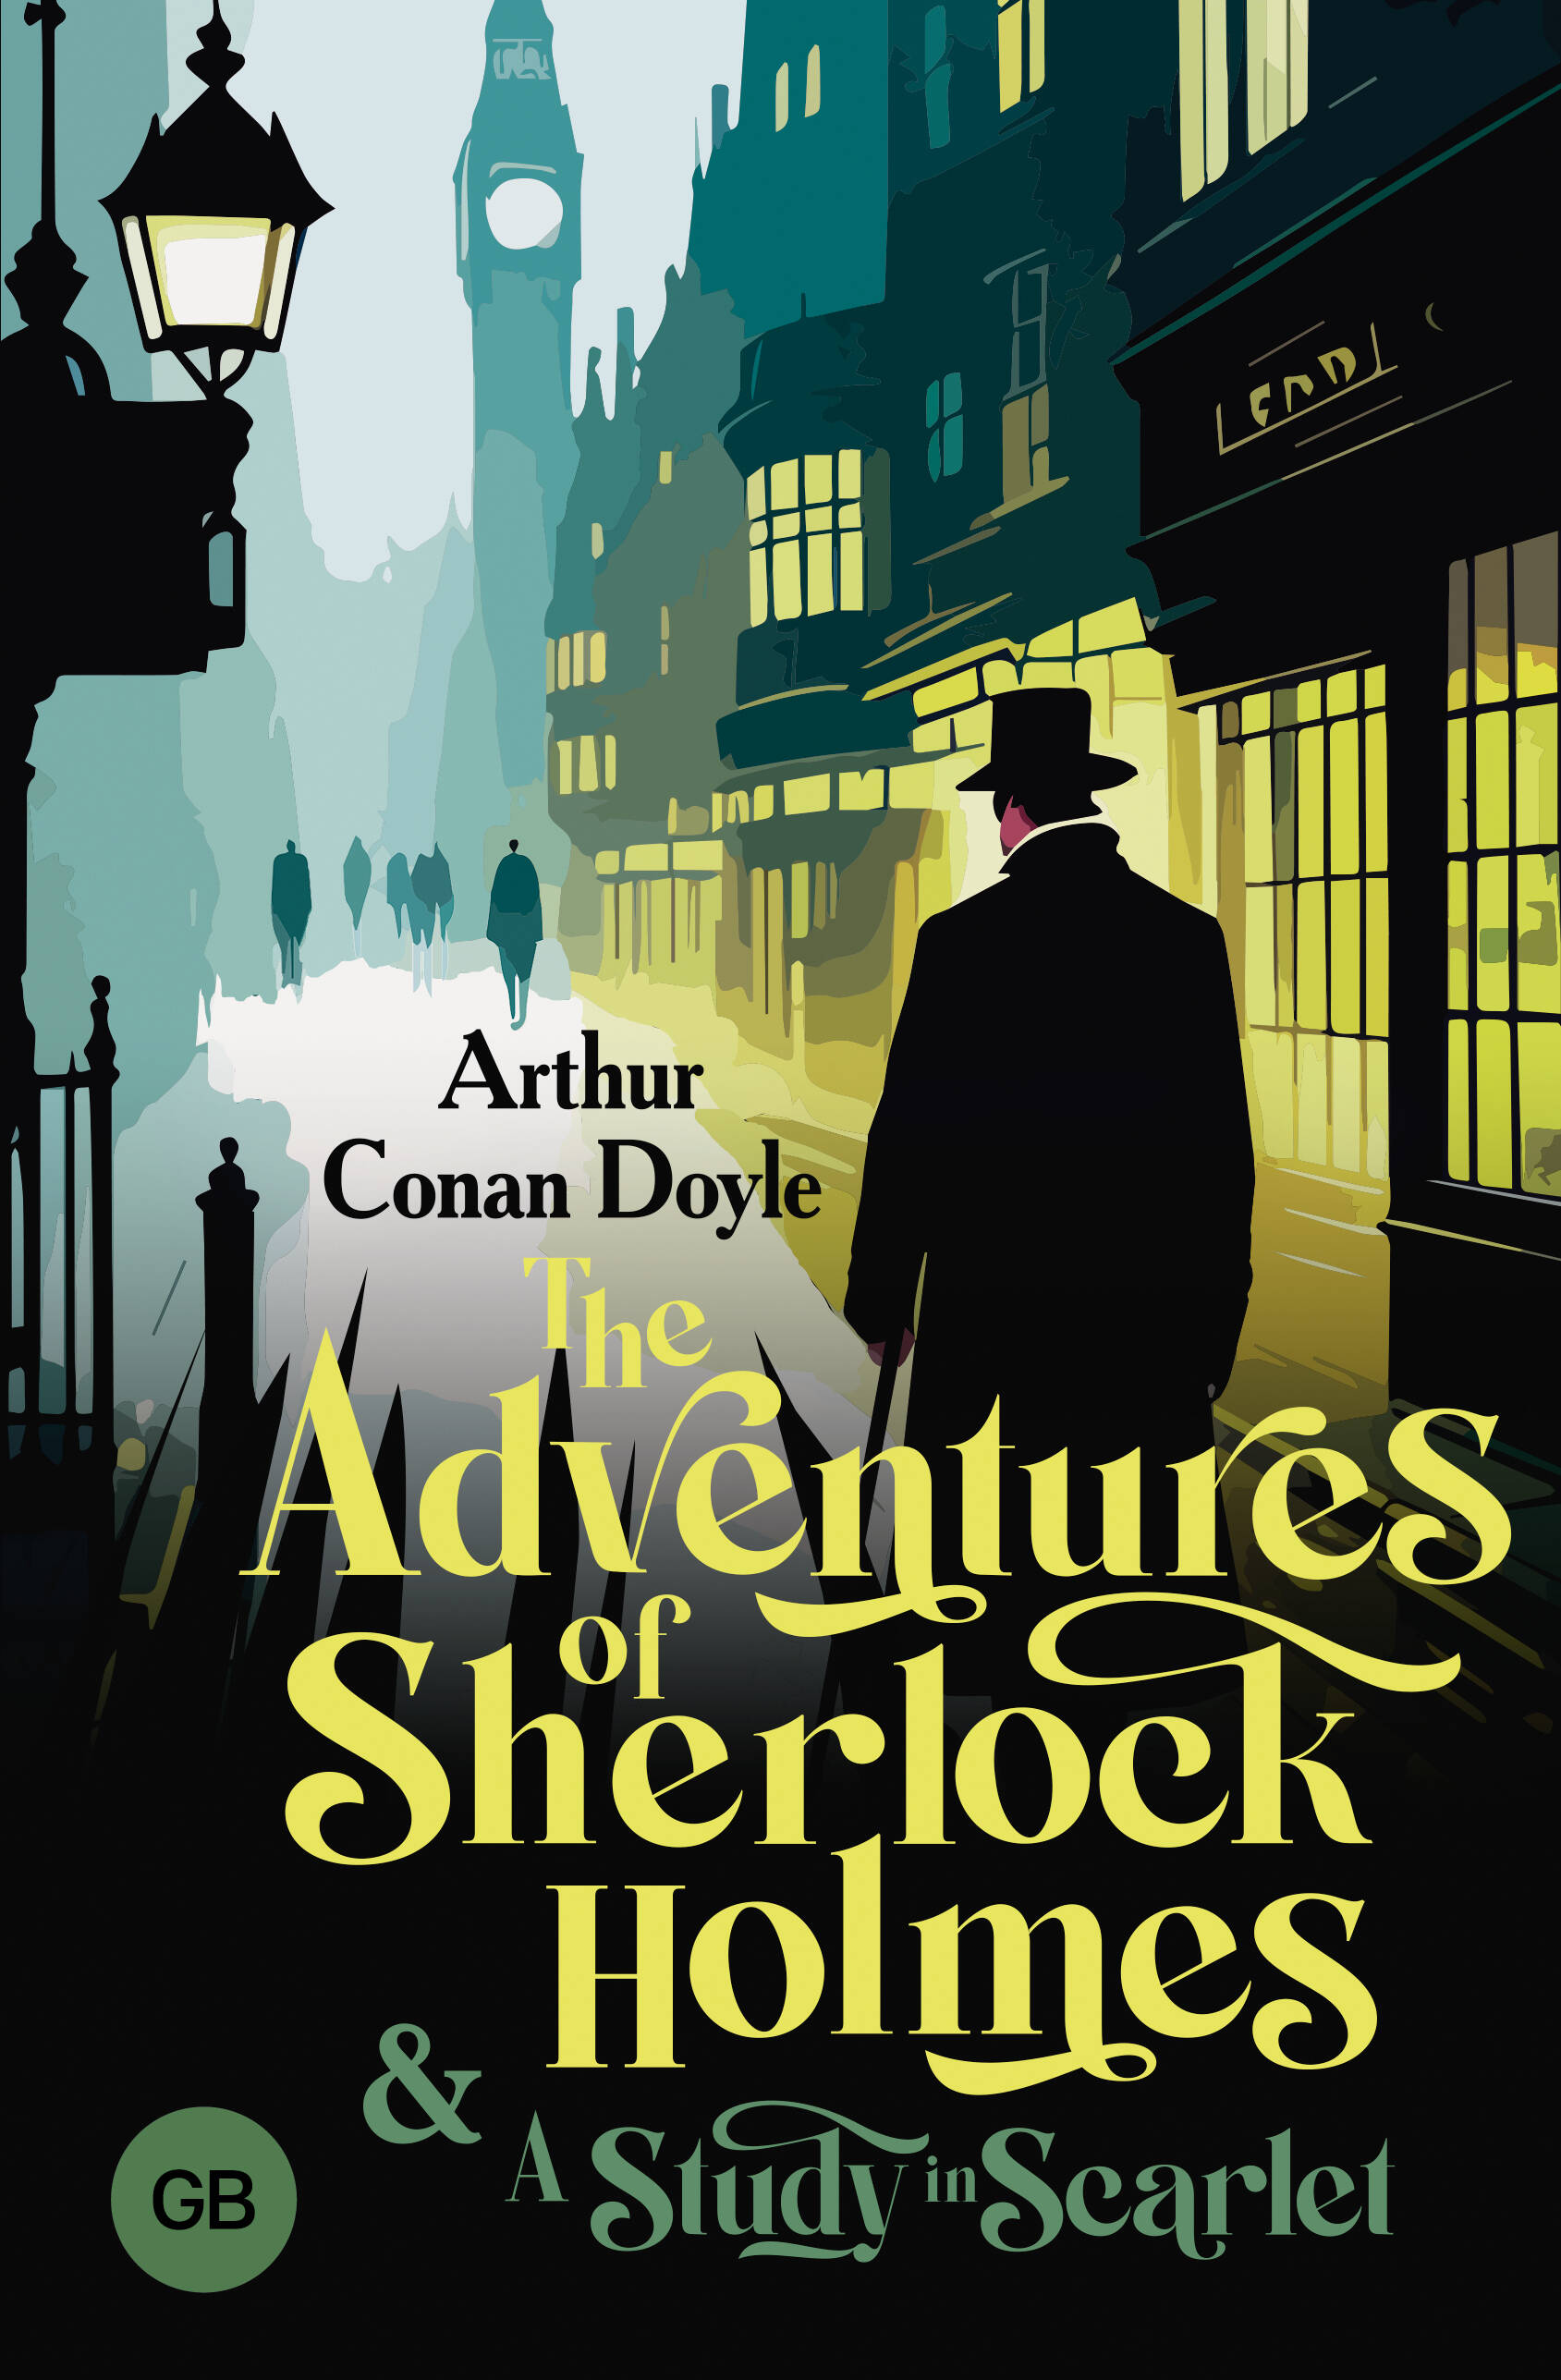 дойл артур конан the valley of fear Дойл Артур Конан The Adventures of Sherlock Holmes